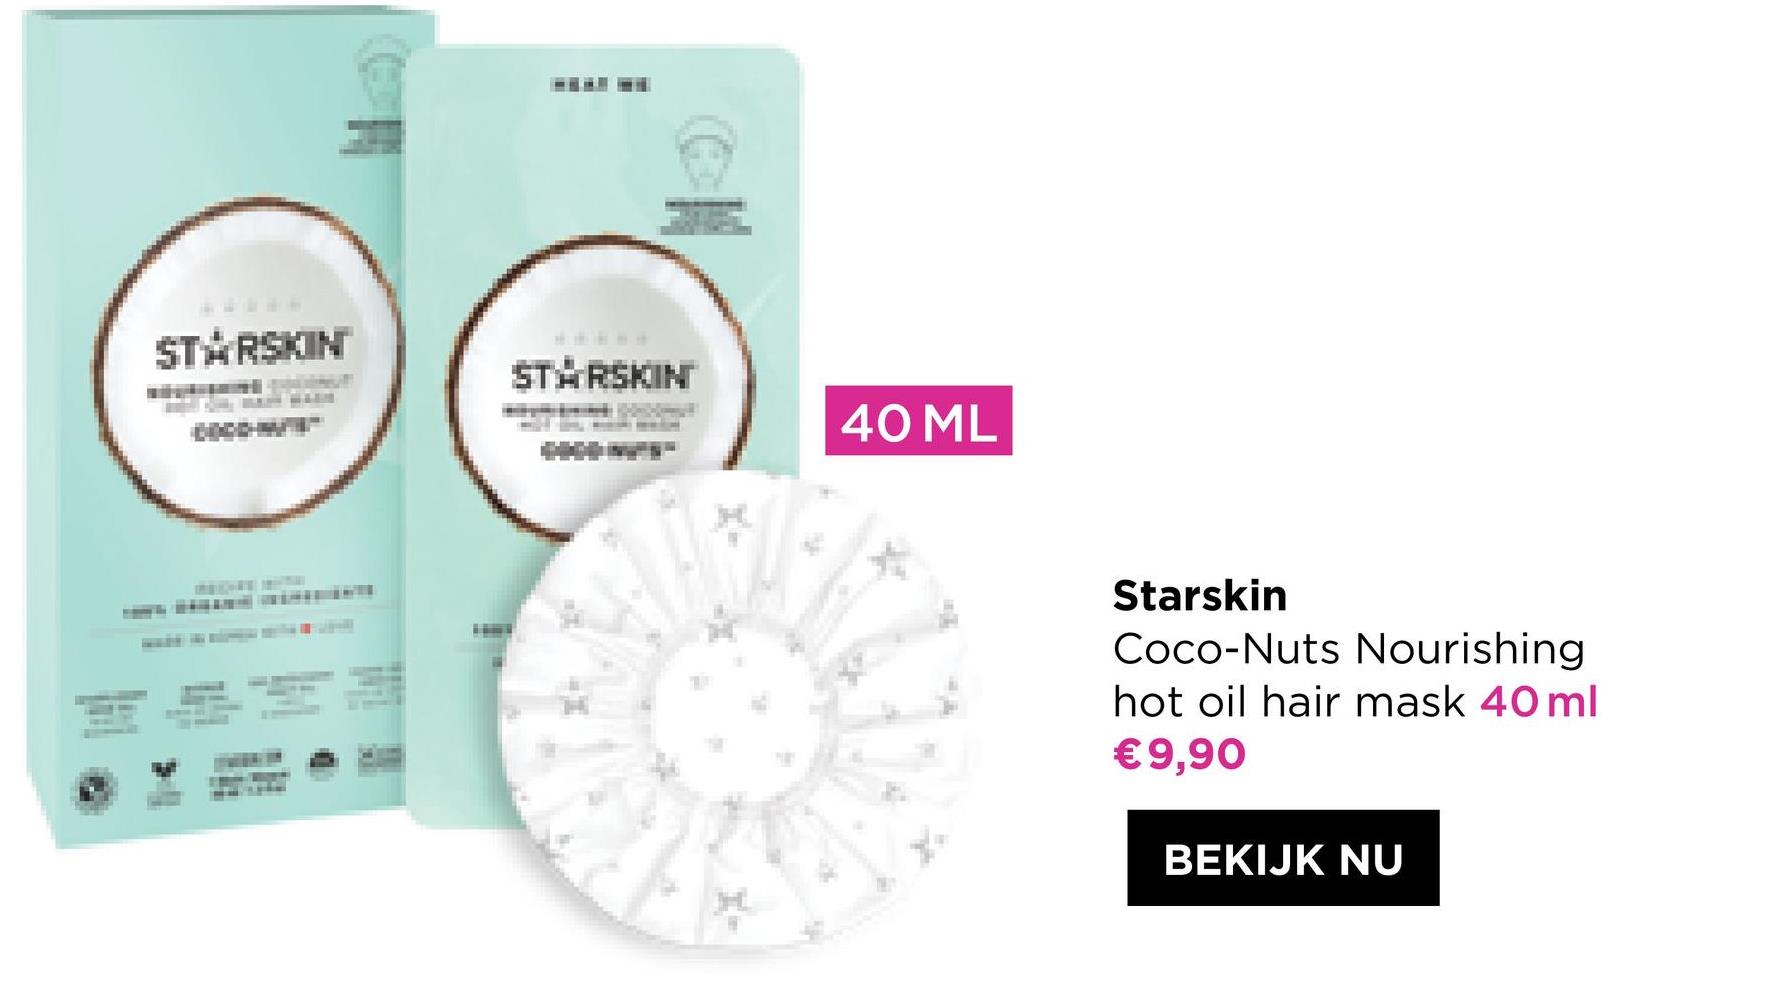 STARSKIN
STRSKIN
40 ML
Starskin
Coco-Nuts Nourishing
hot oil hair mask 40 ml
€9,90
BEKIJK NU
